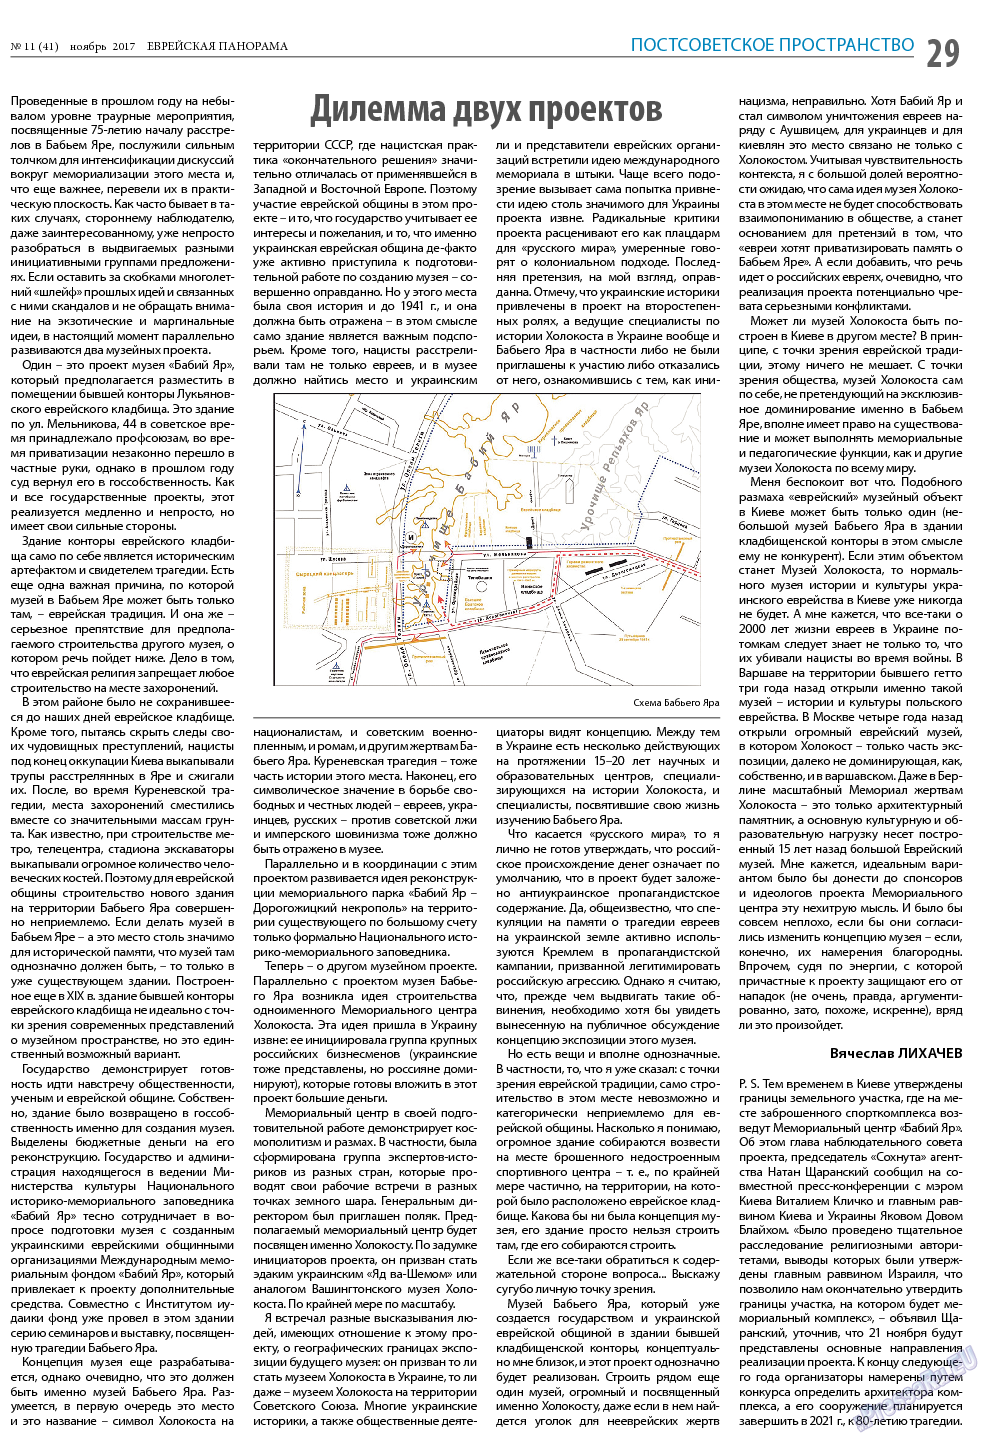 Еврейская панорама, газета. 2017 №11 стр.29